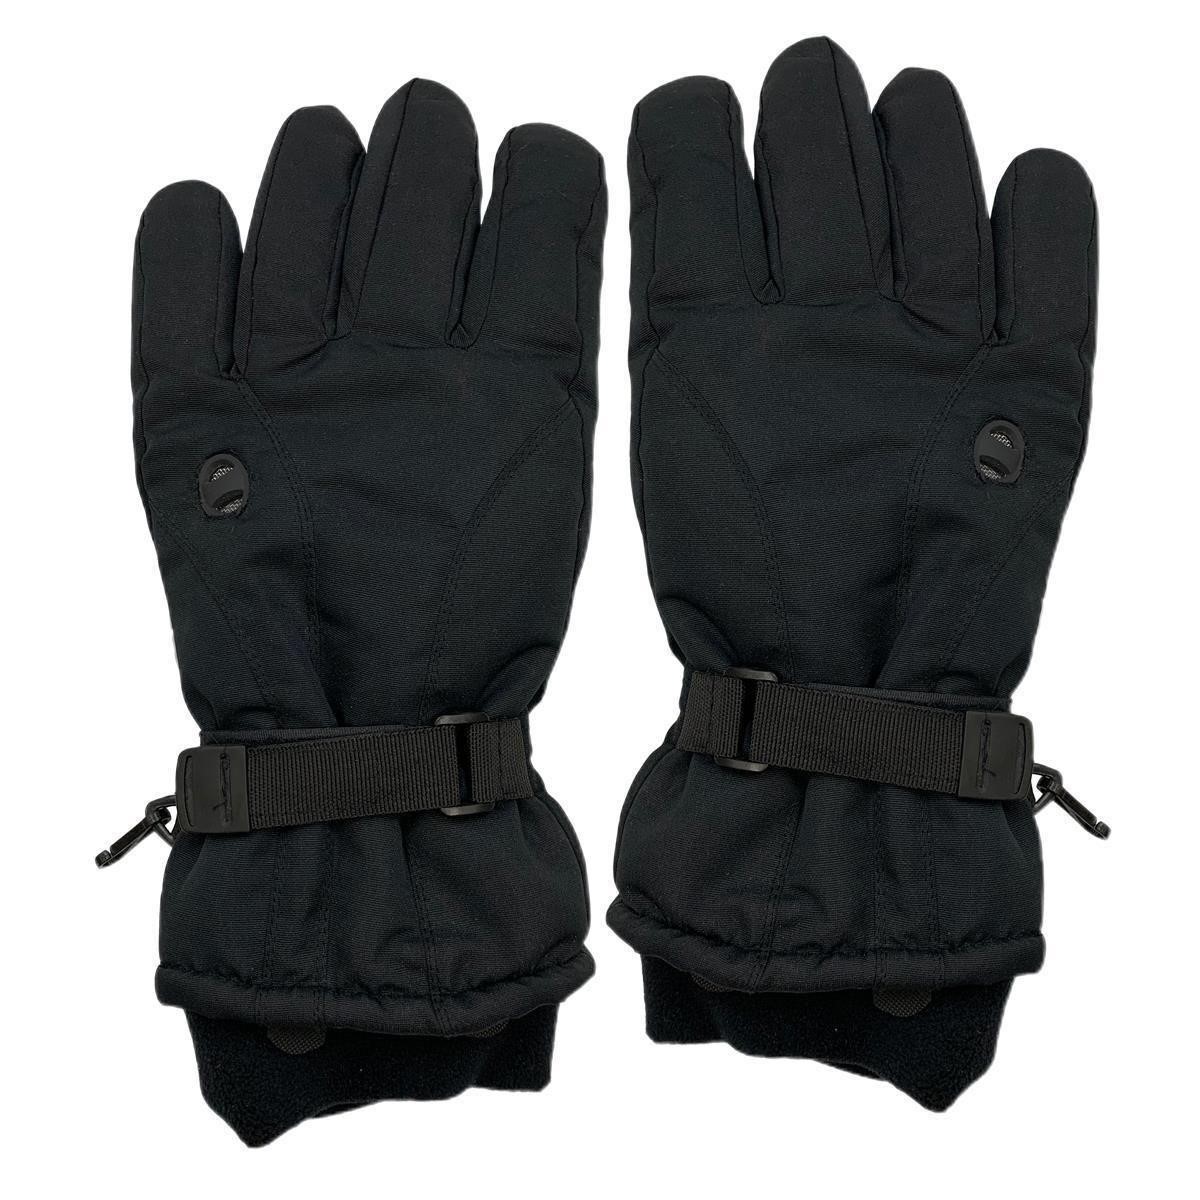 Winter's Edge Basic Glove